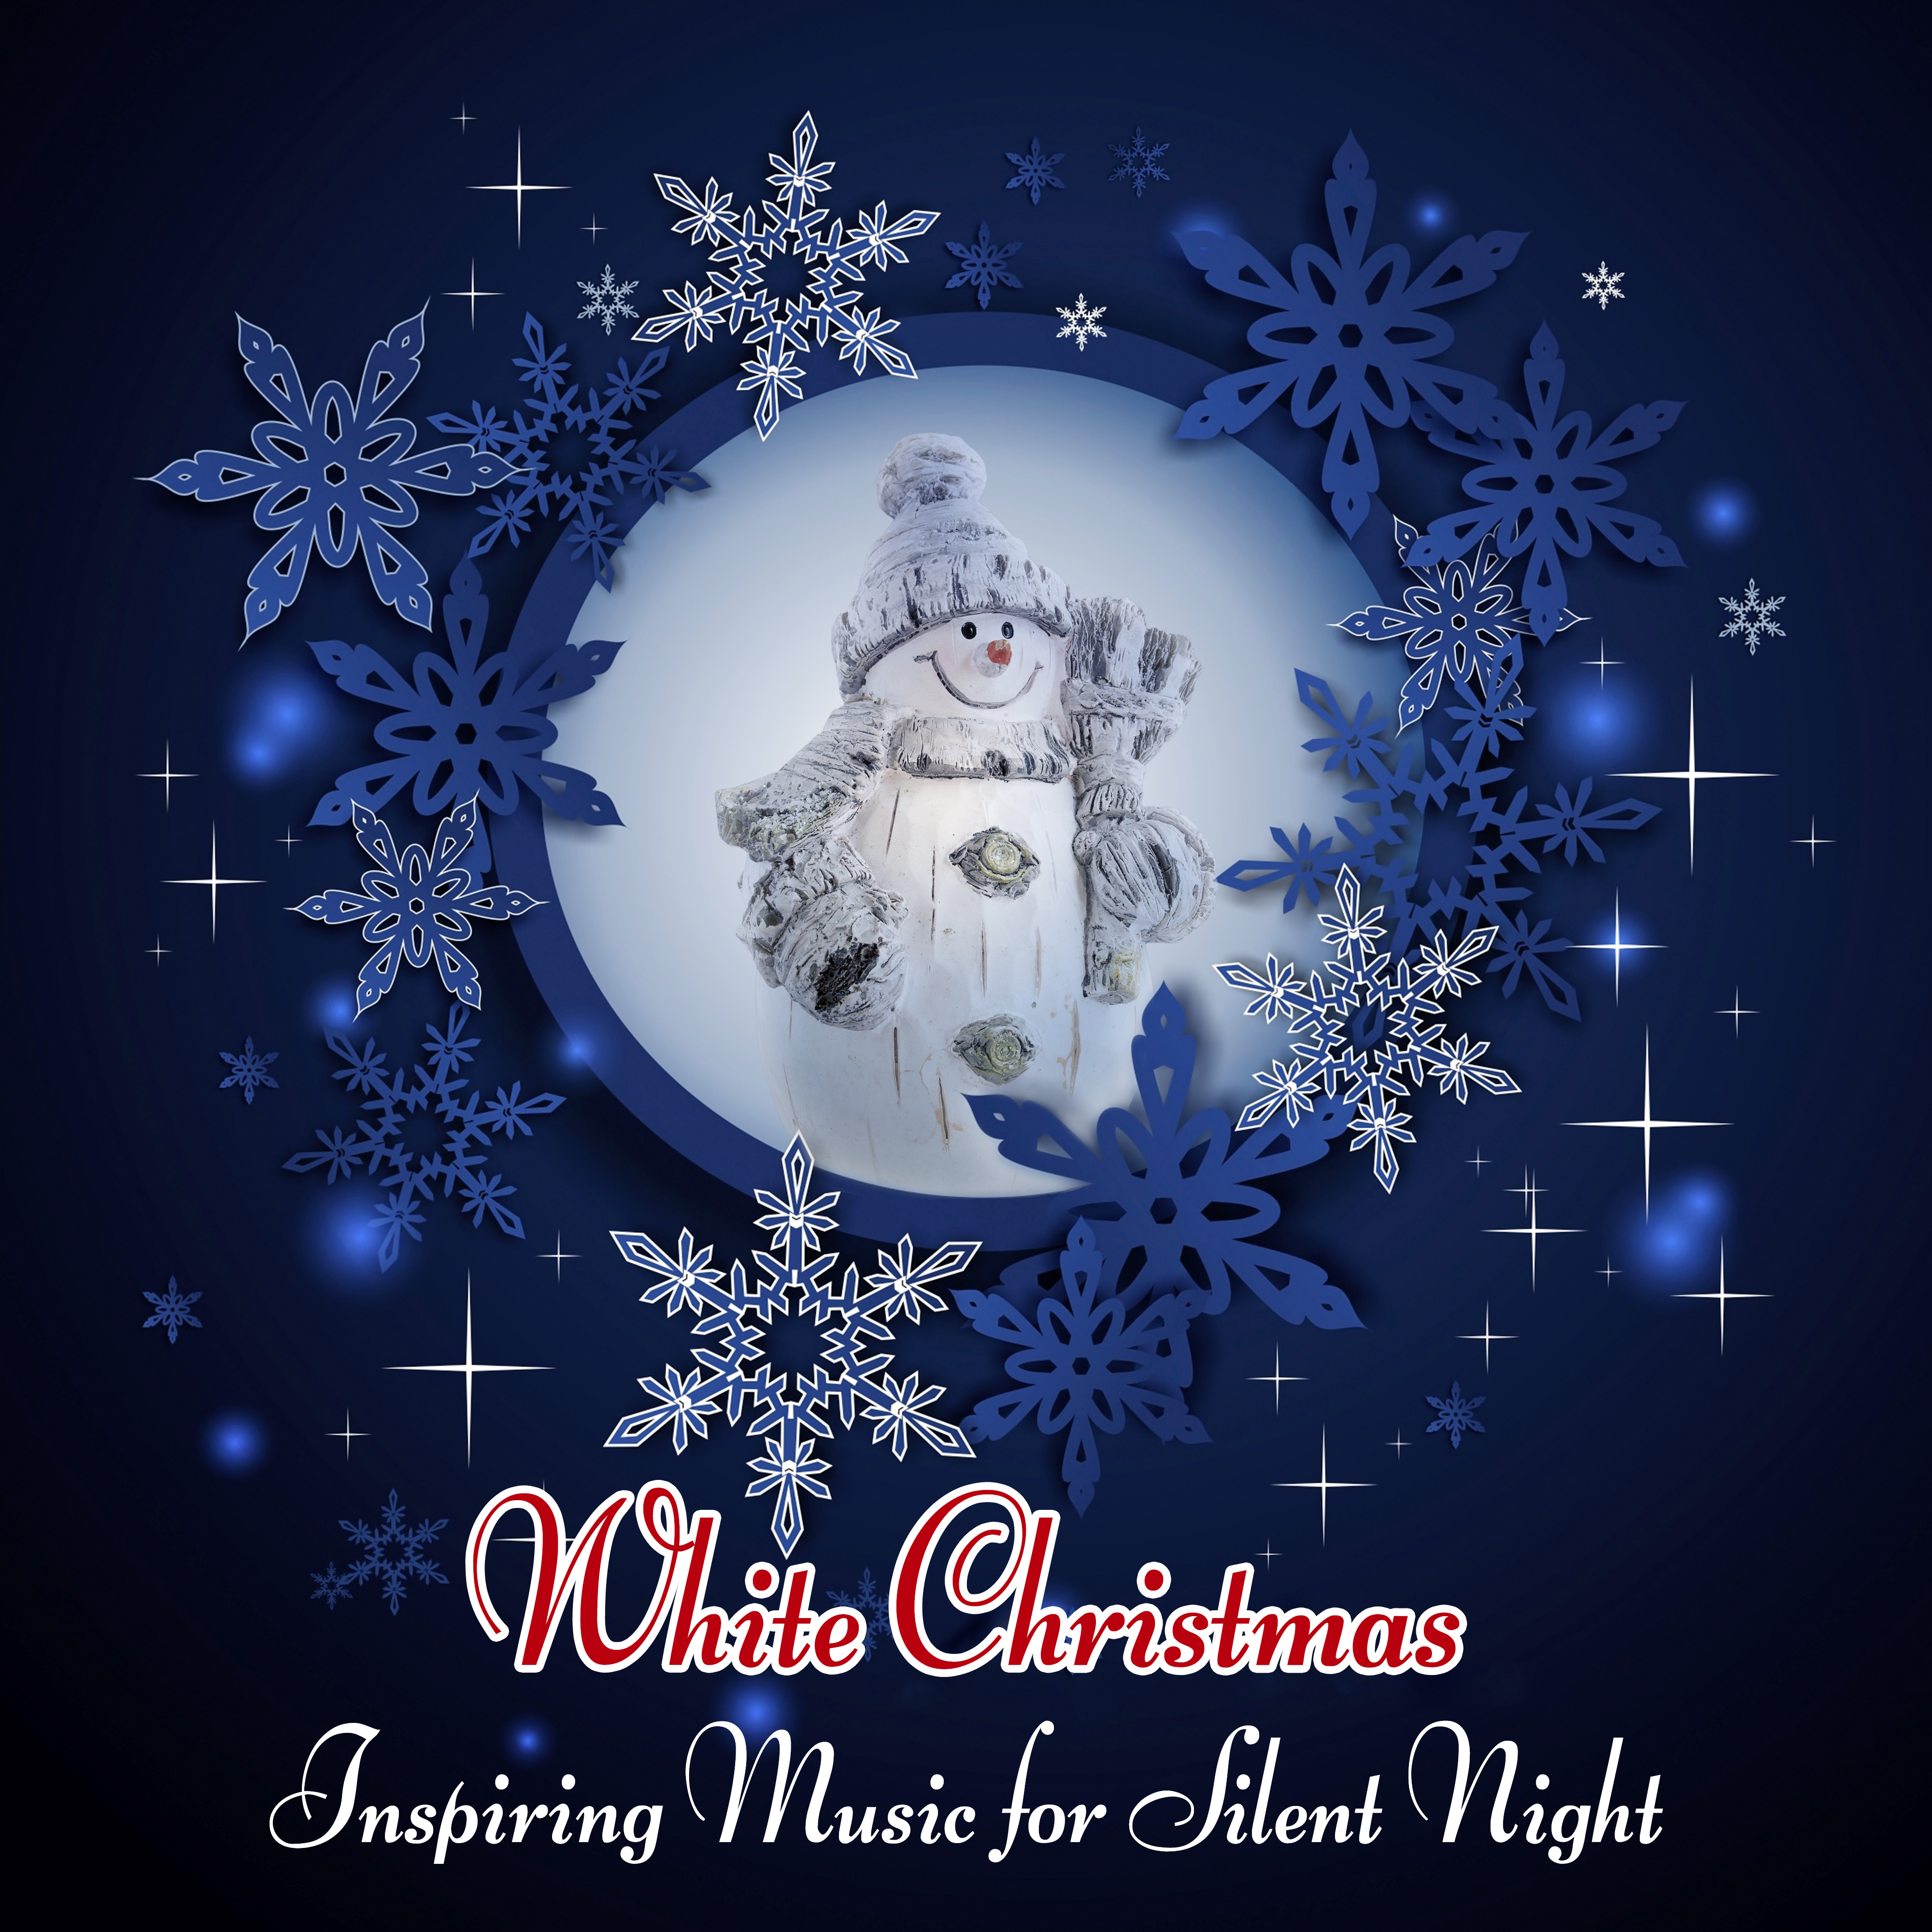 White Christmas: Inspiring Music for Silent Night and Magical Christmas Time